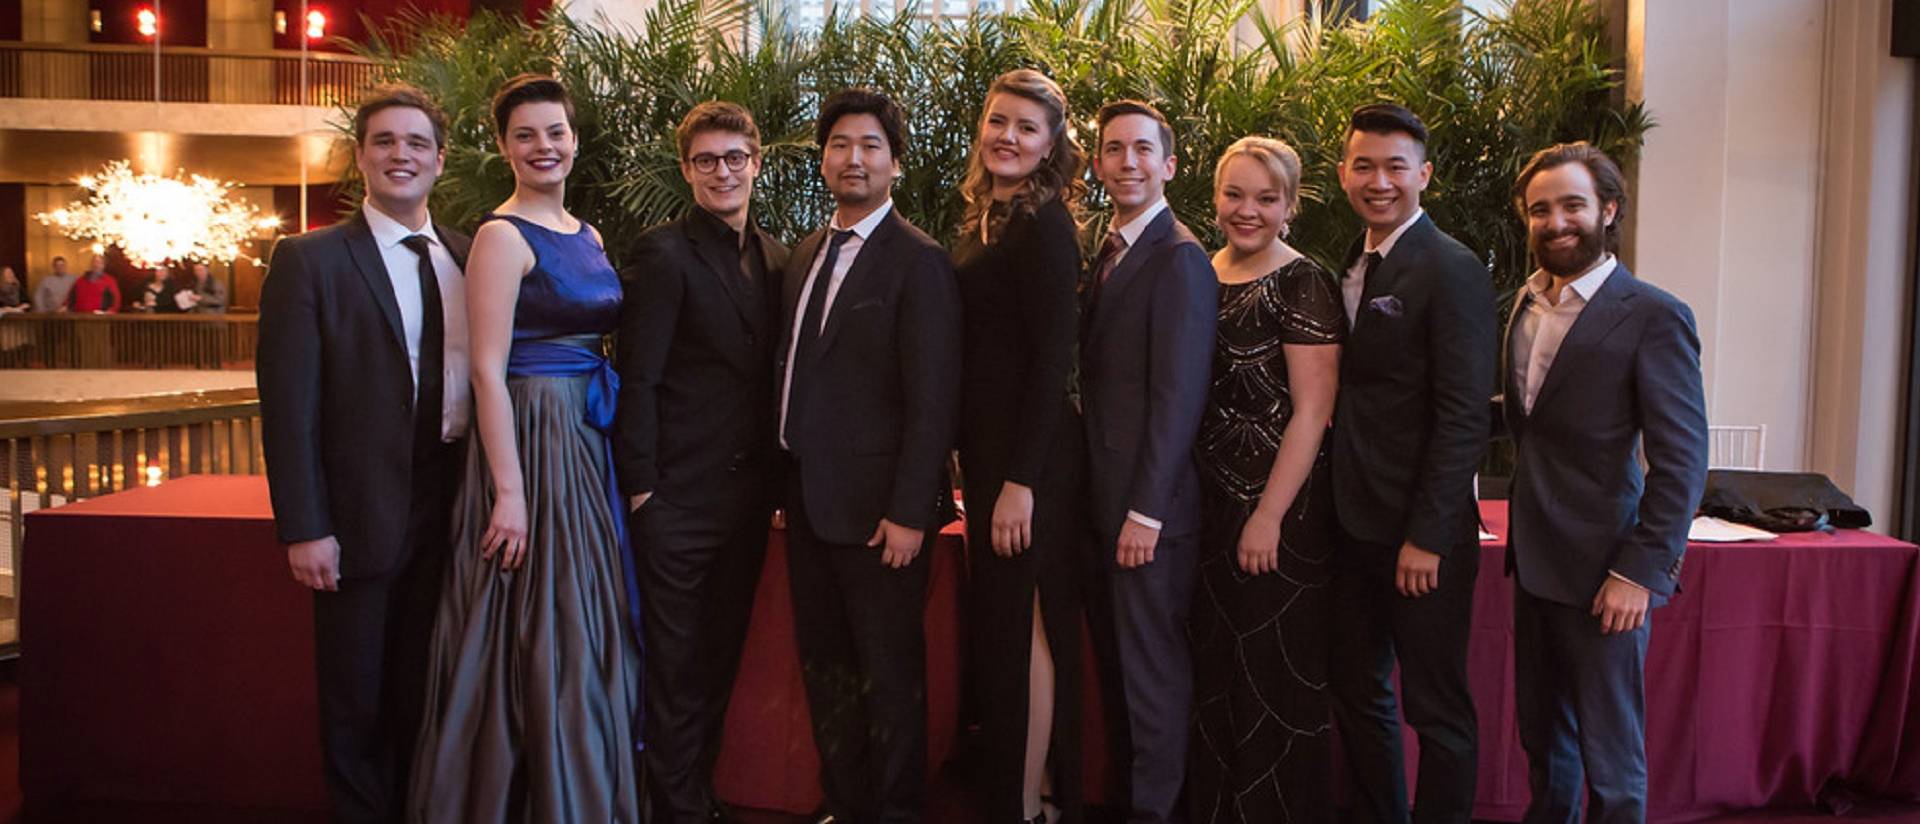 2016 Metropolitan Opera National Council Audition grand finalists